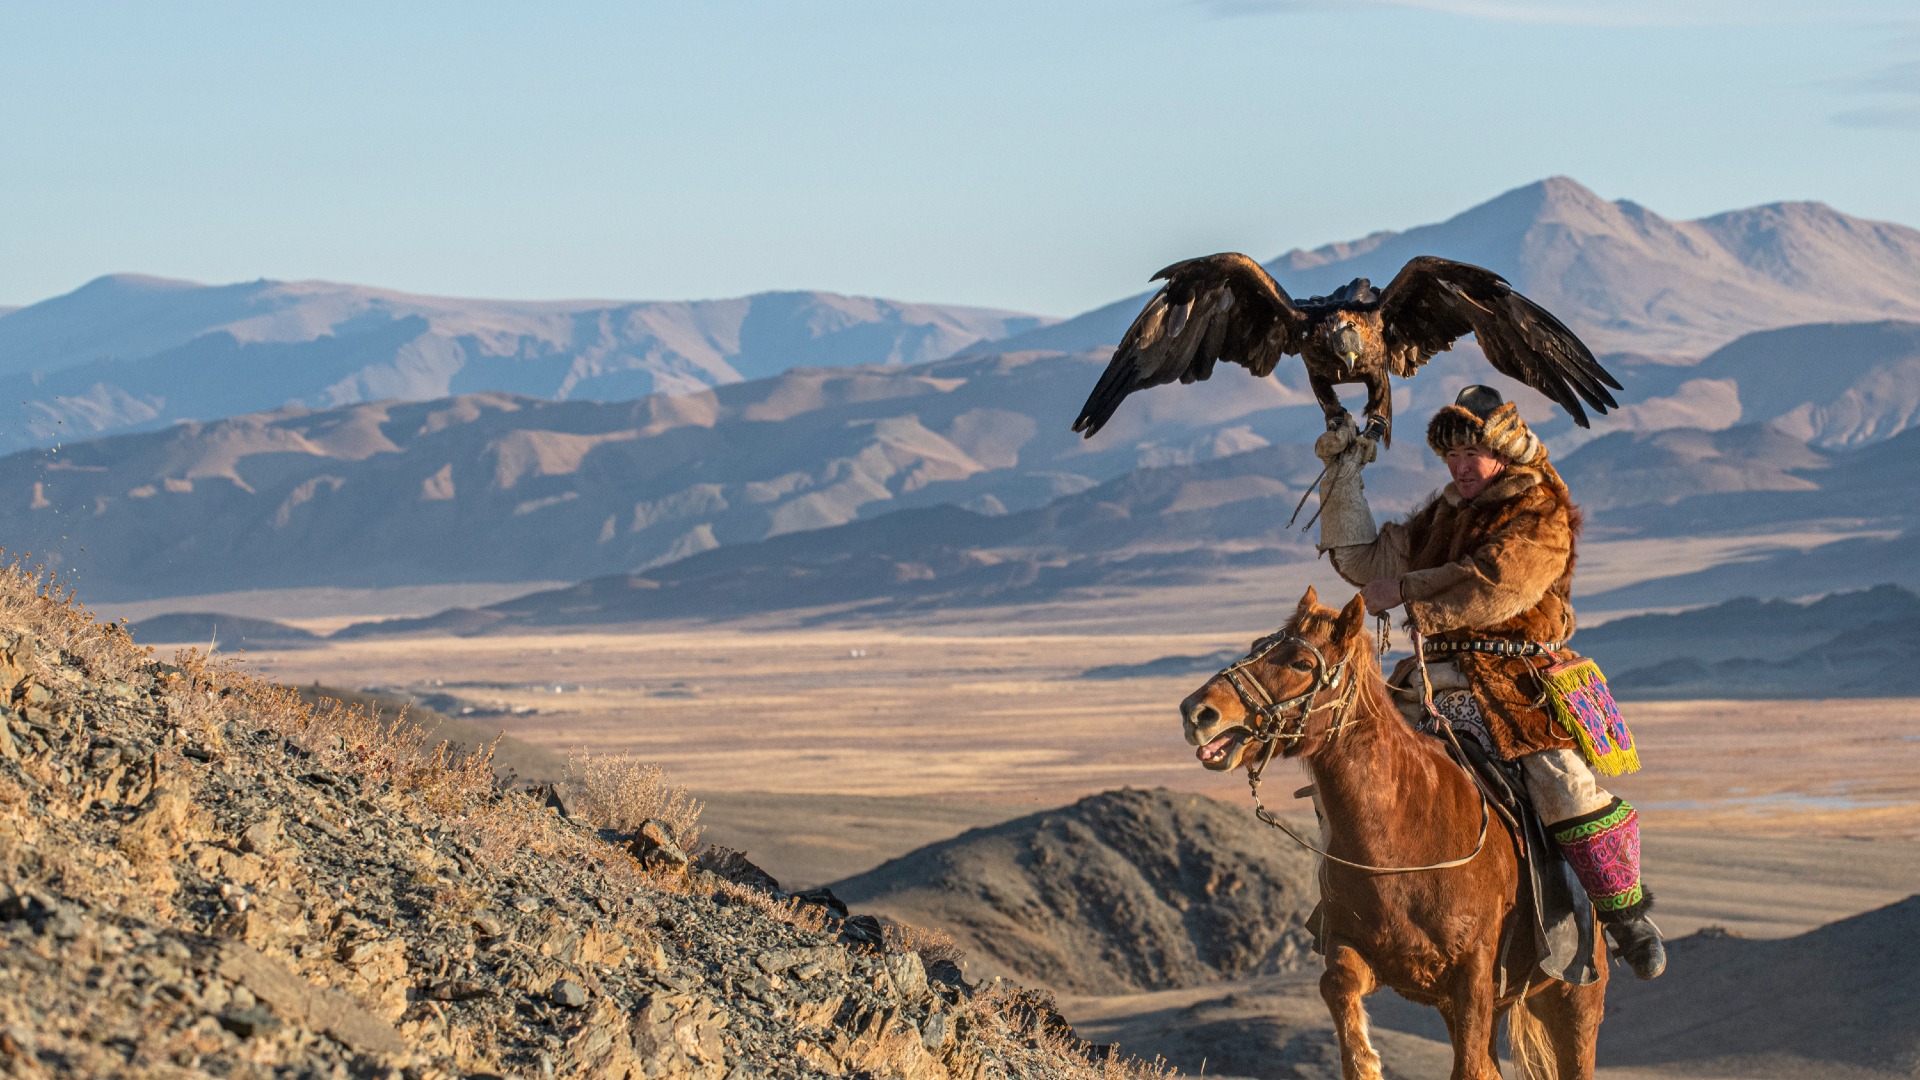 Eagle festival Mongolia tour 2023 | Premium Travel Mongolia